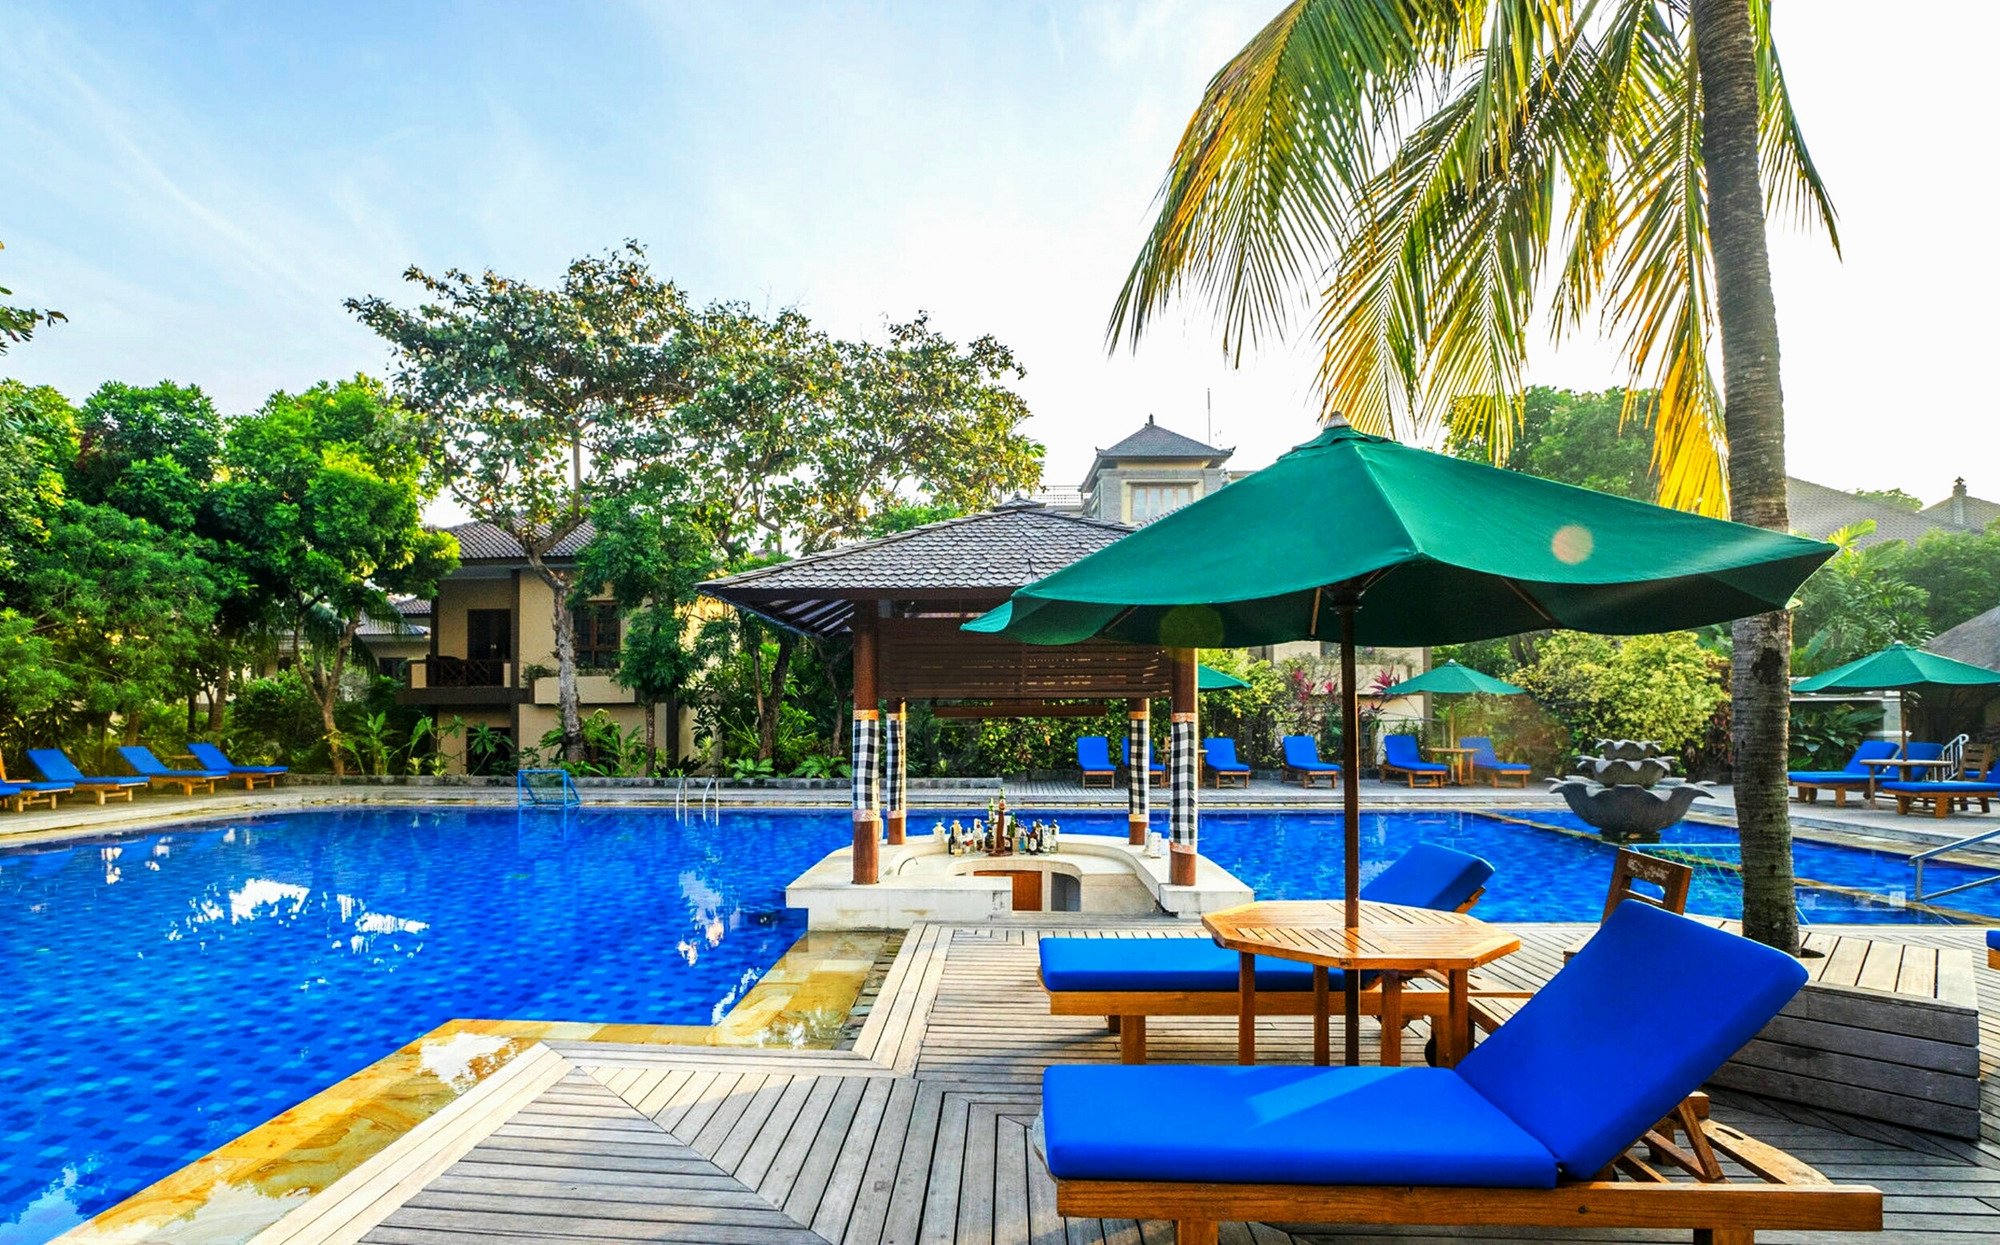 Бали белгород. Рисата Бали Ресорт. Бали Кута Резорт. Отель: *risata Bali Resort & Spa. Бали Кута Резорт 4 звезды.